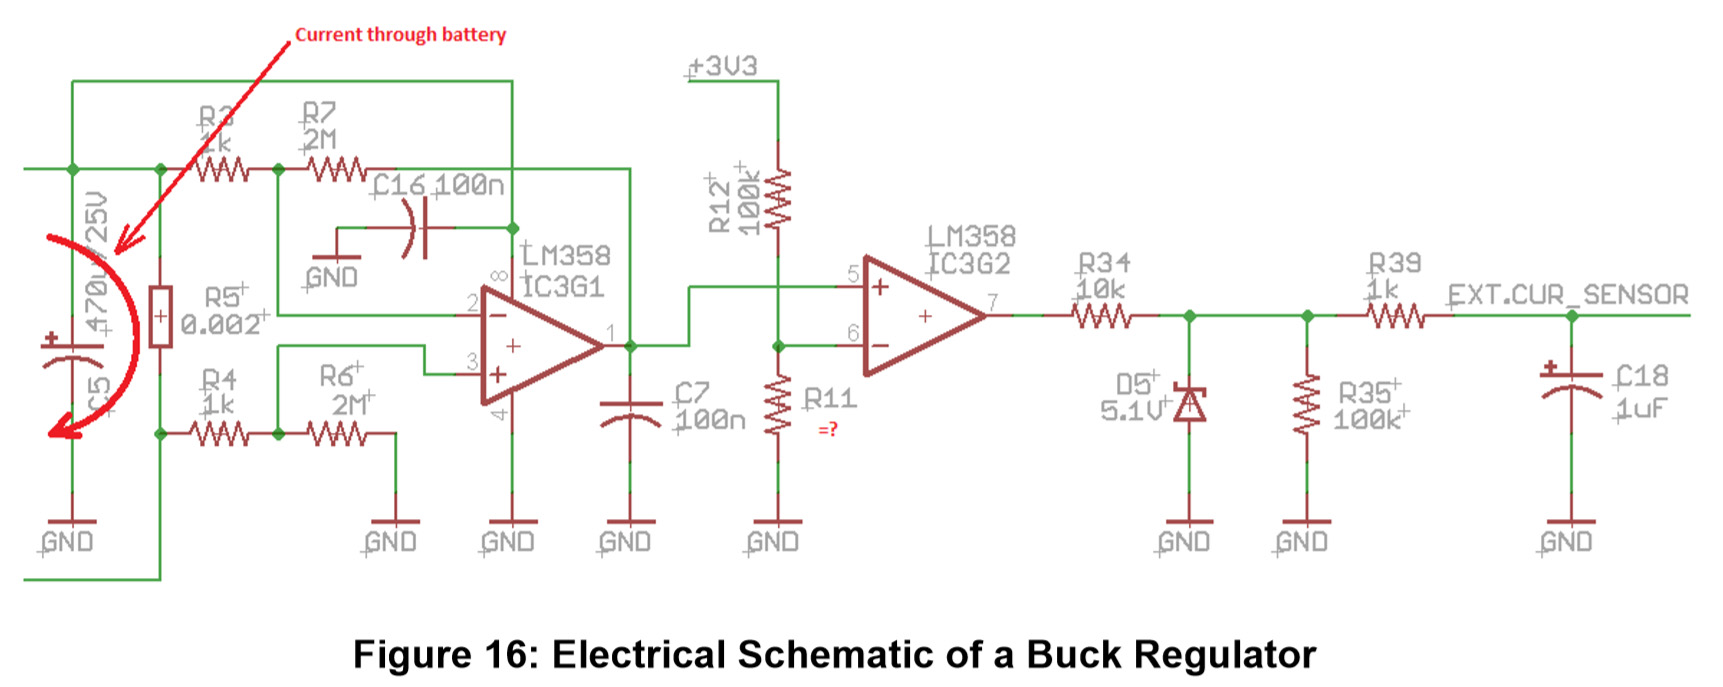 fig 16 electrical schematic of a buck regulator.jpg